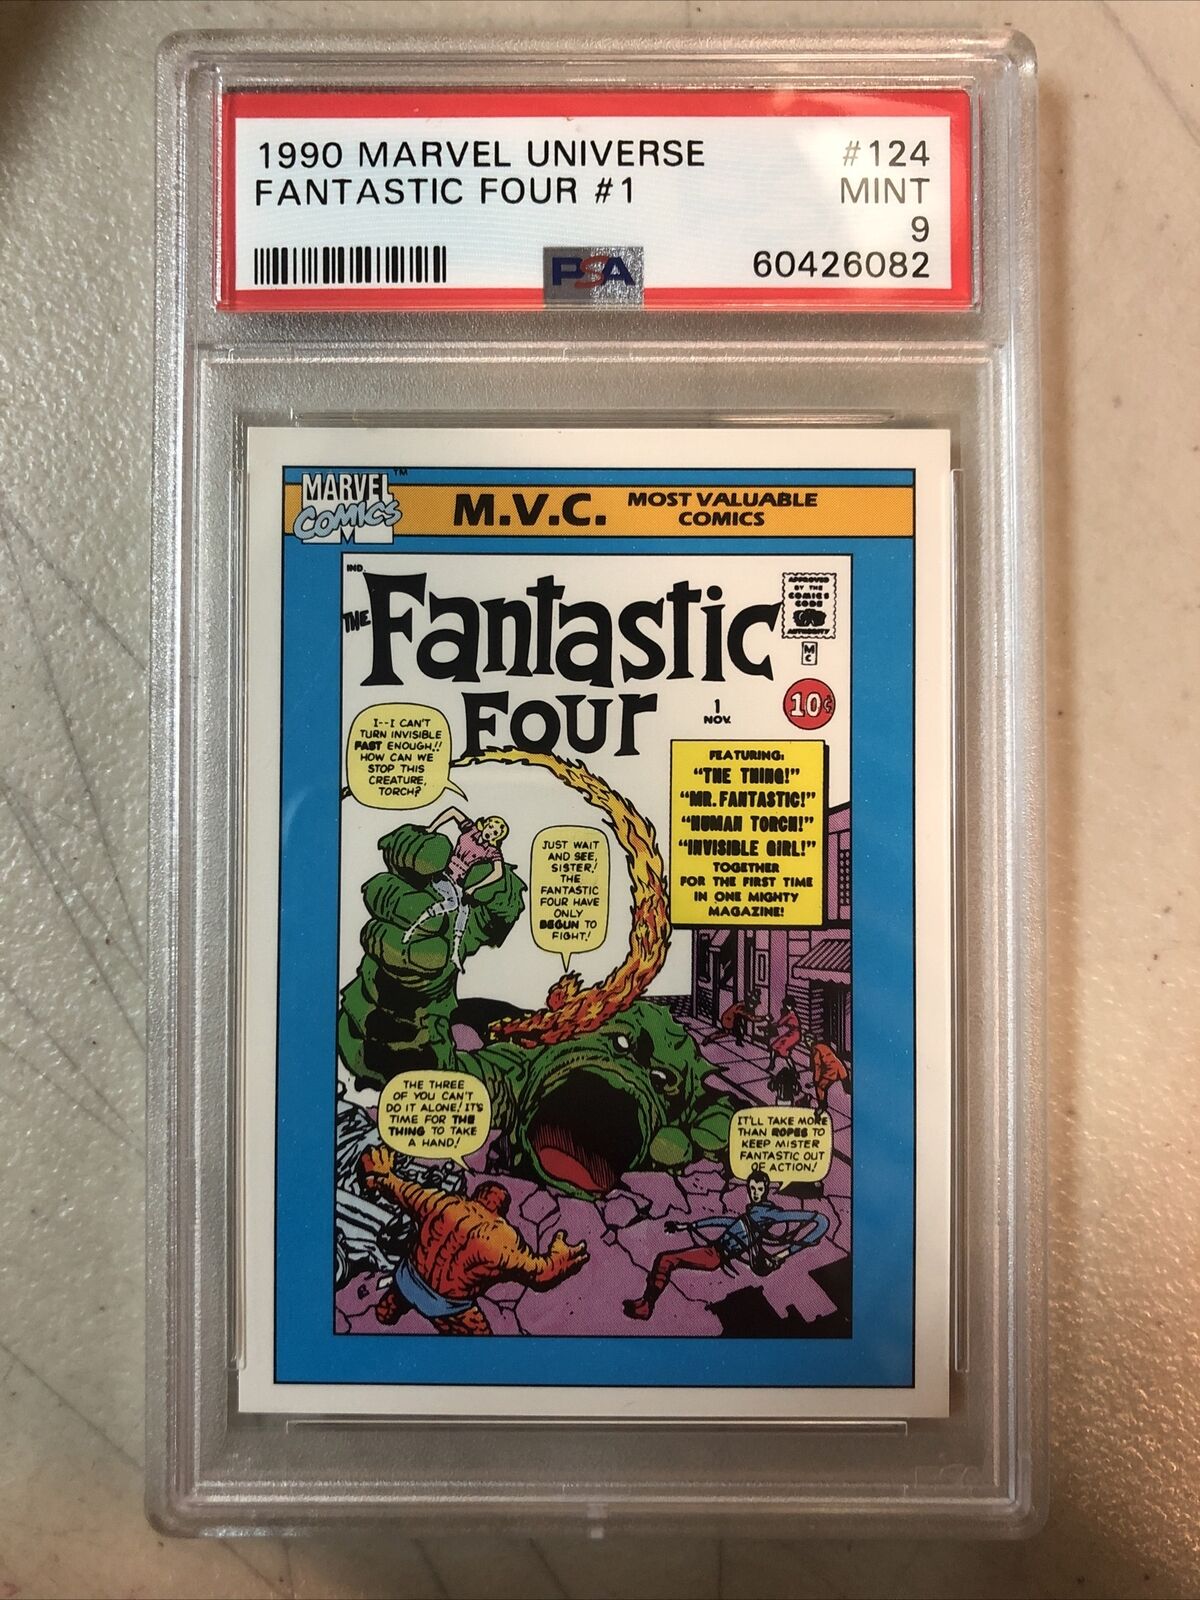 1990 Mavel Universe #124 Fantastic Four #1 26082 Mint 9